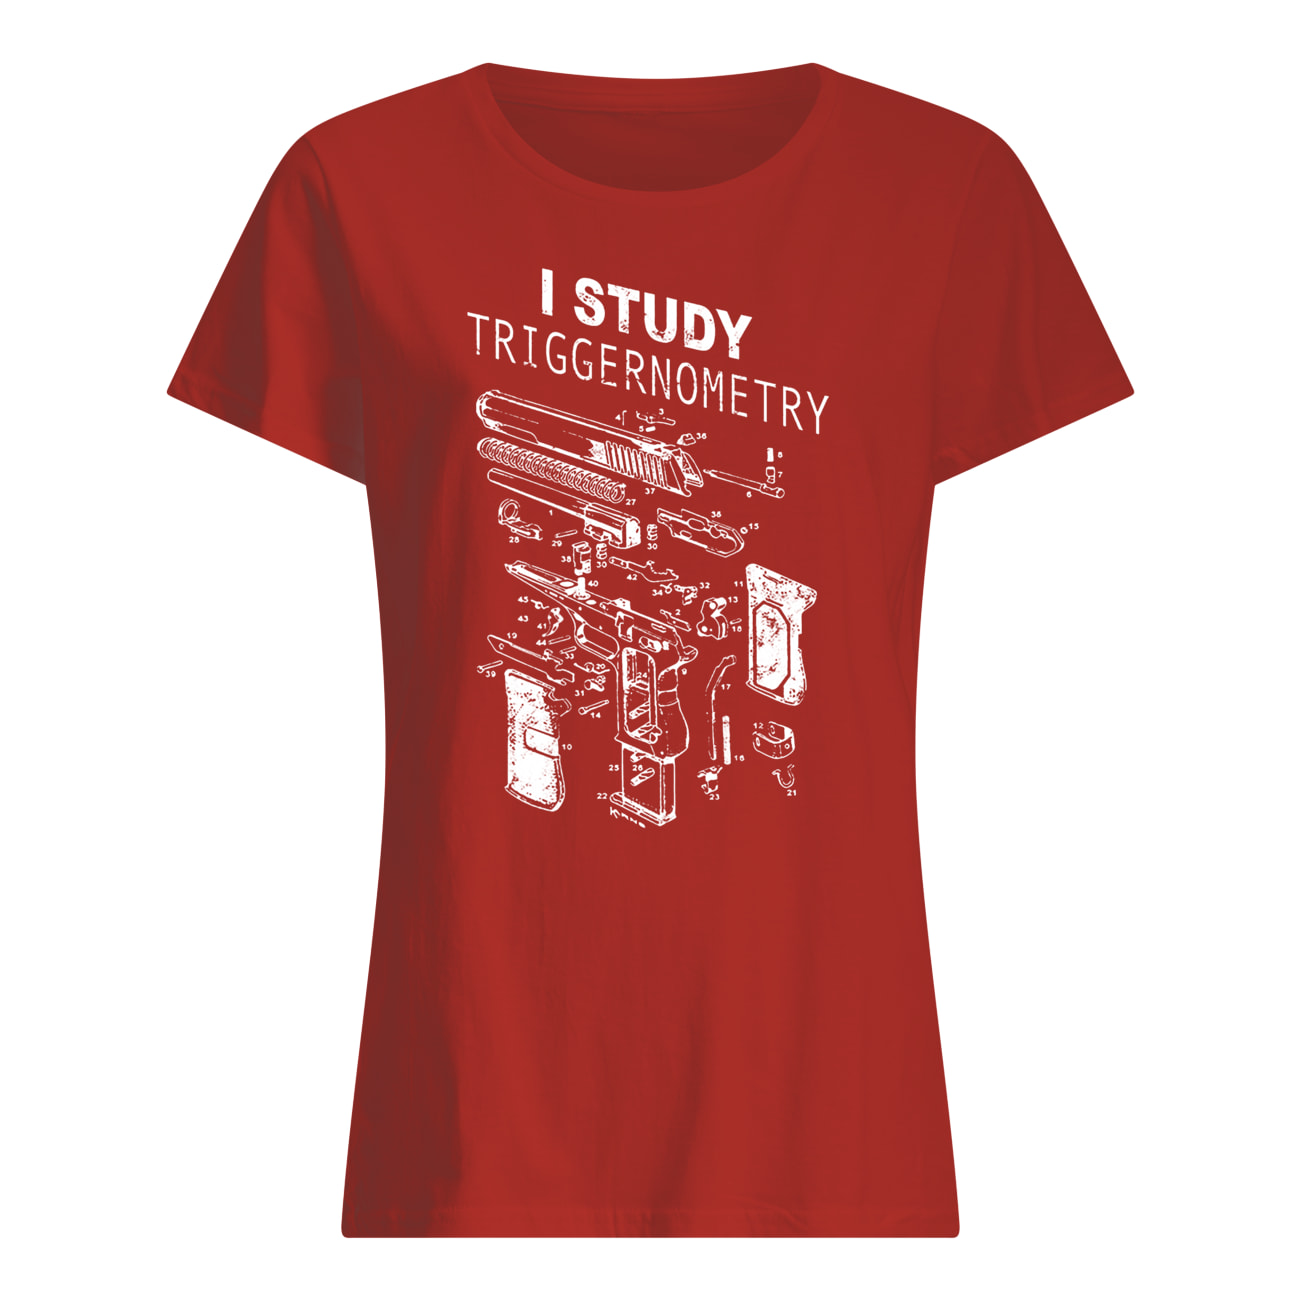 I study triggernometry womens shirt